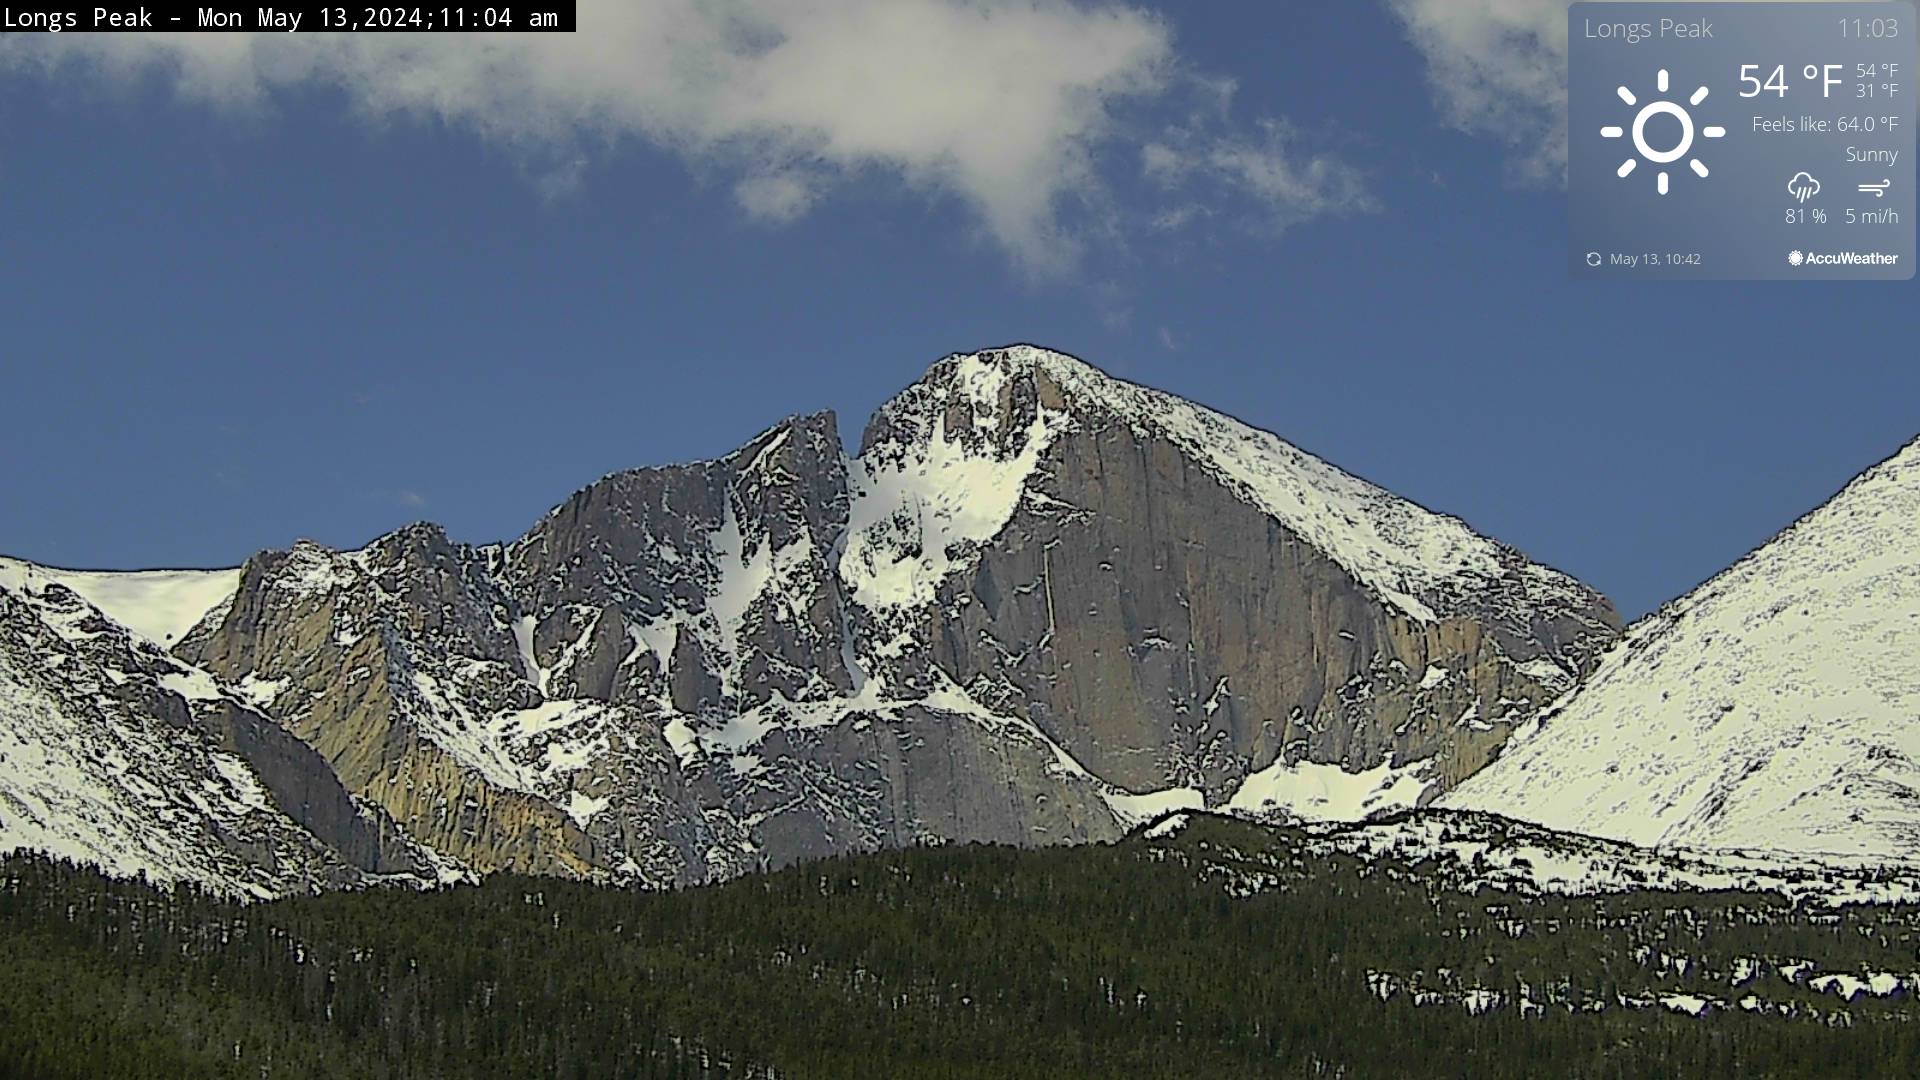 Webcam in the Rocky Mountain National Park, USA: Longs Peak.